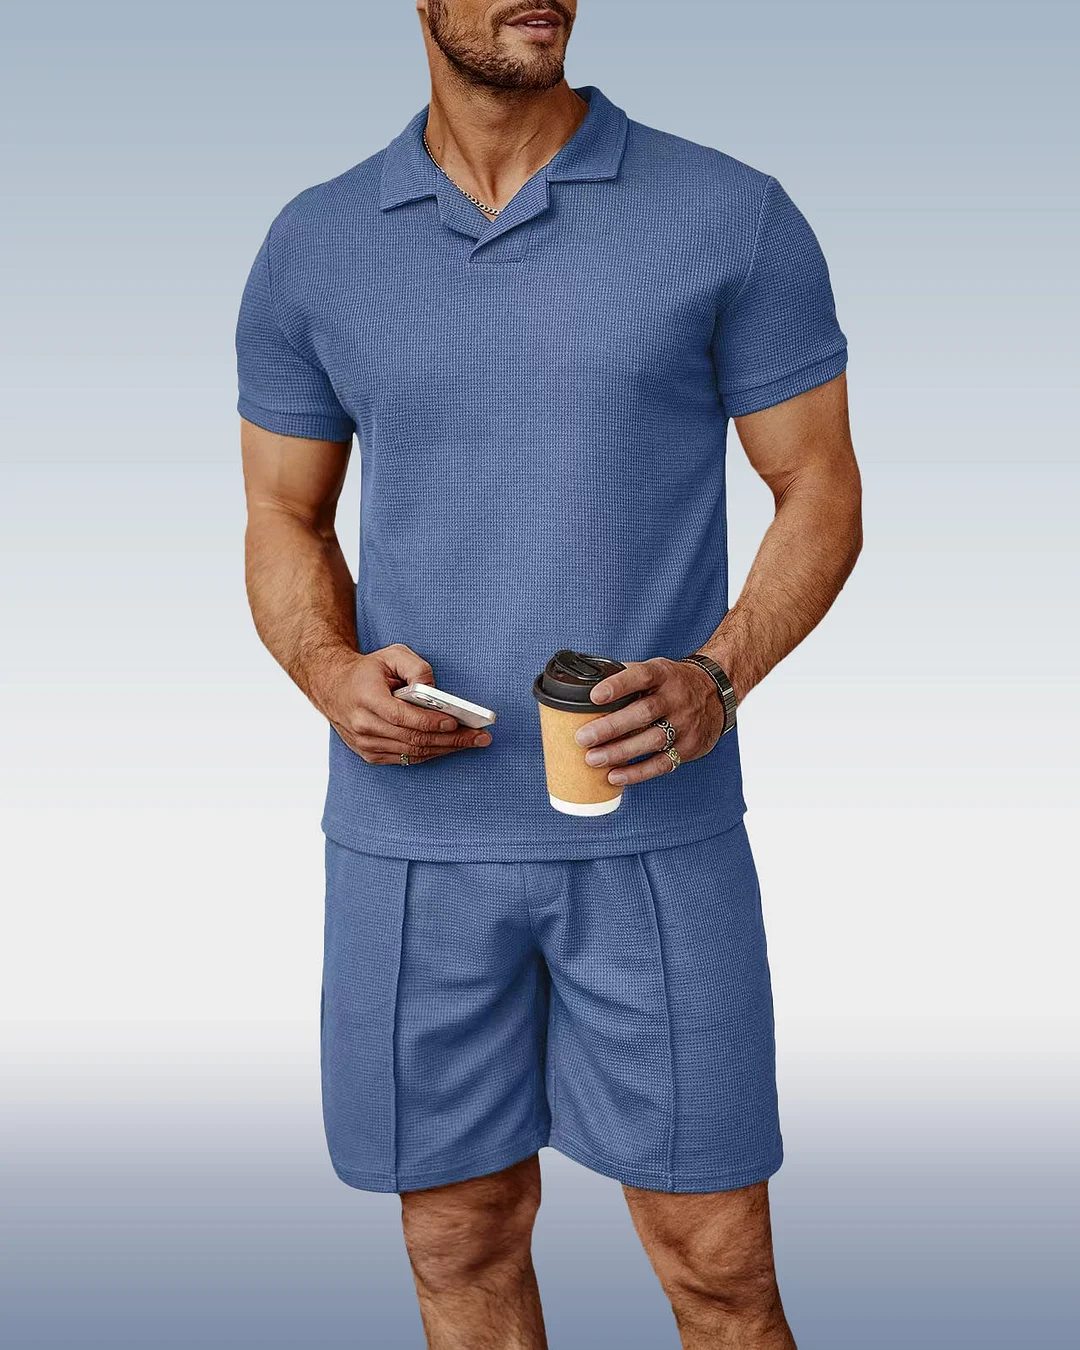 Suitmens Men's Blue Knit V-Neck Polo Shirt